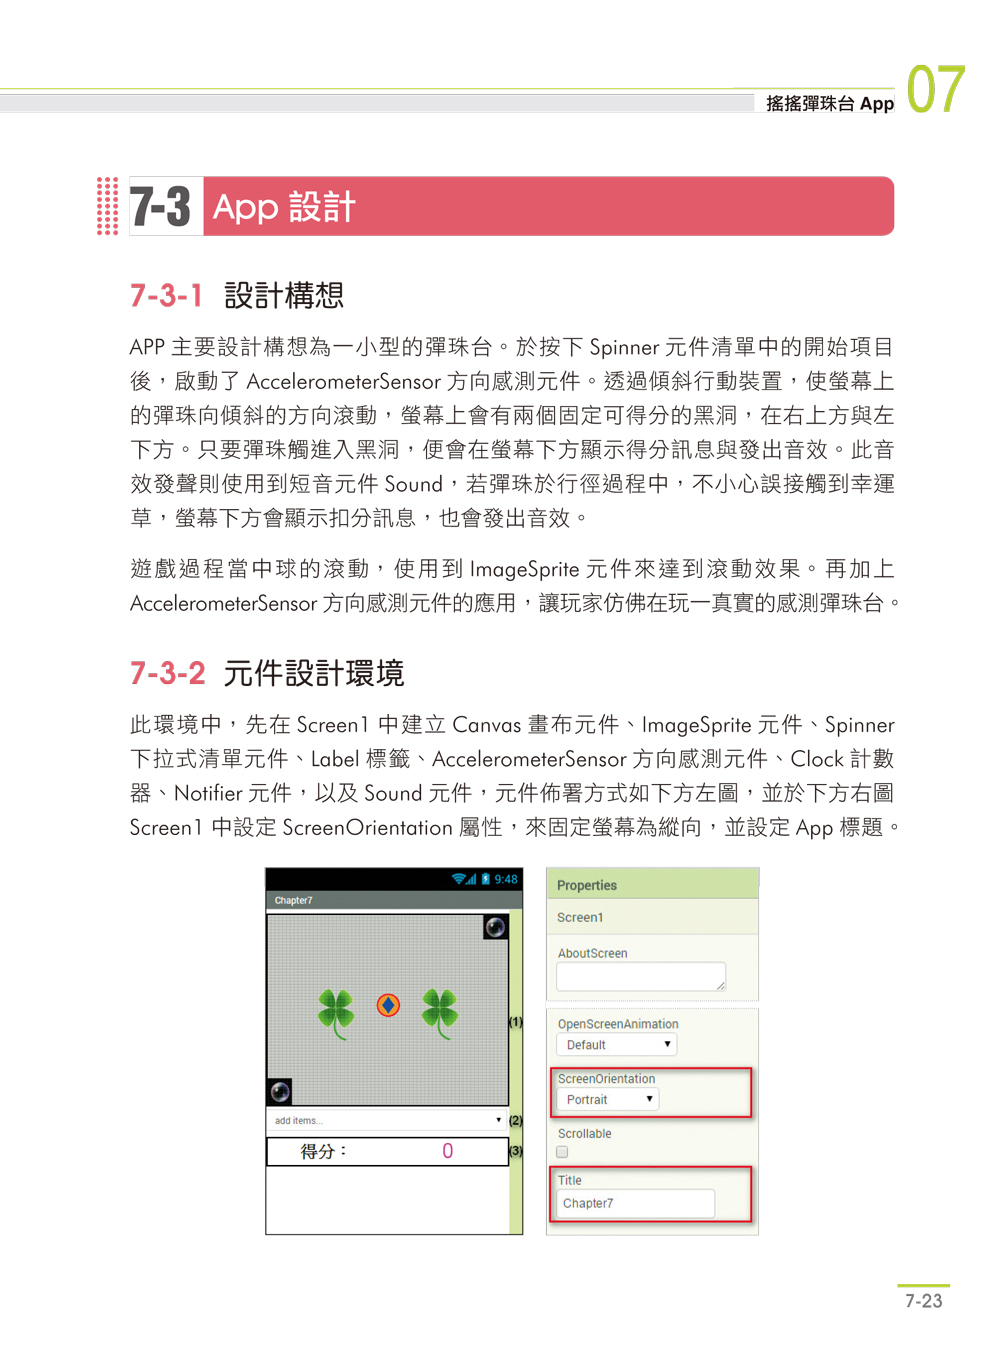 ►GO►最新優惠► 【書籍】App Inventor 2：Android 行動應用程式開發設計